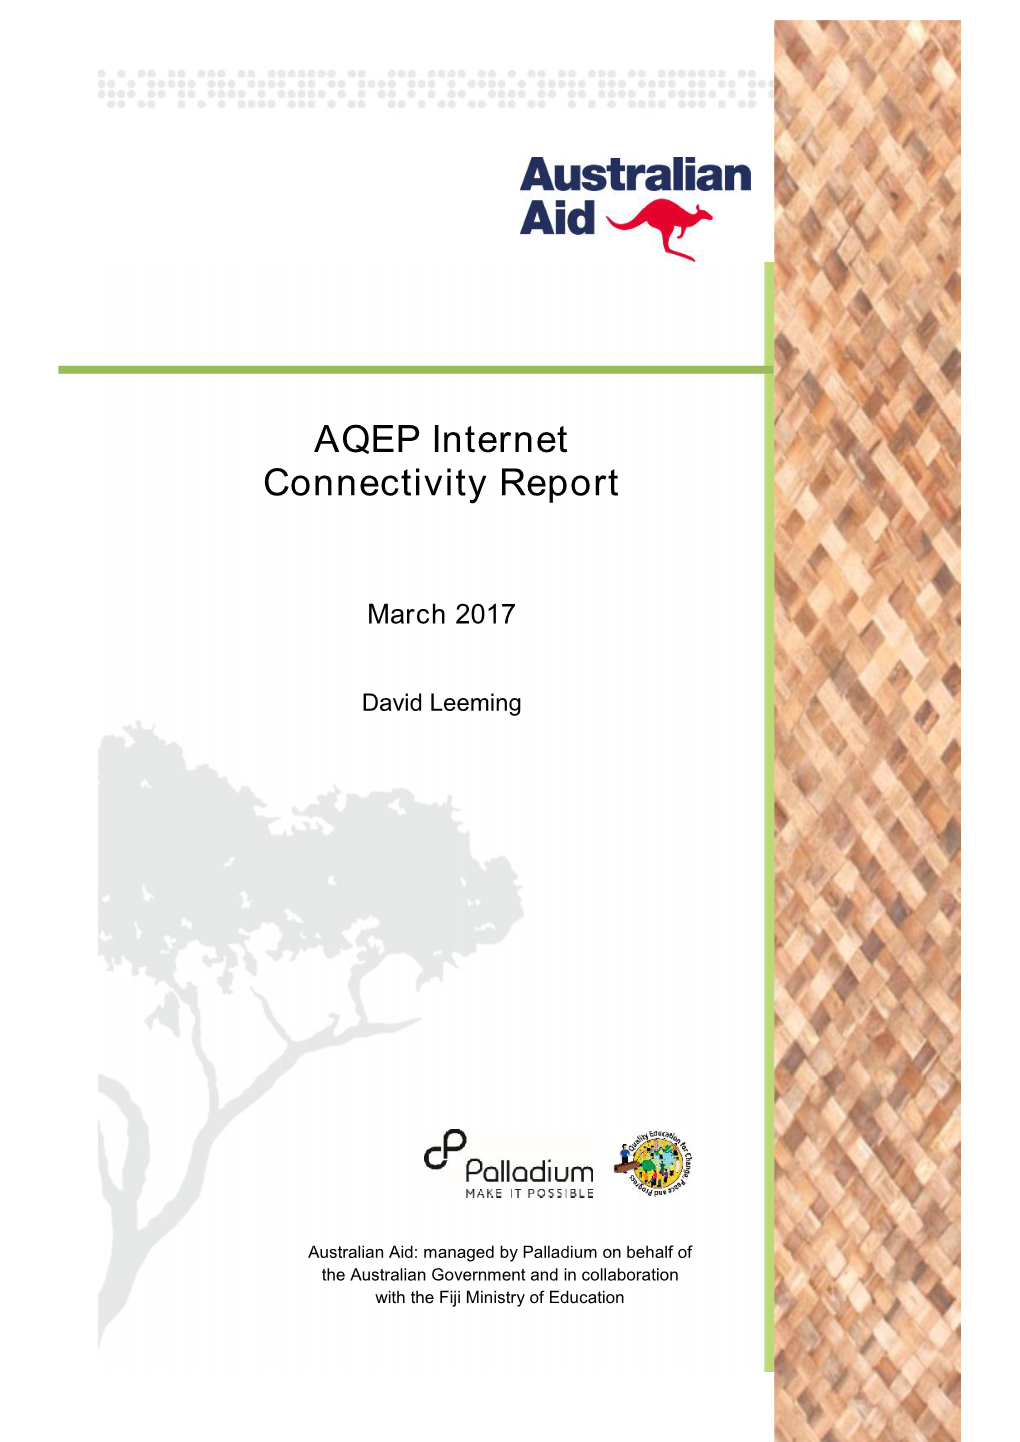 AQEP Internet Connectivity Report